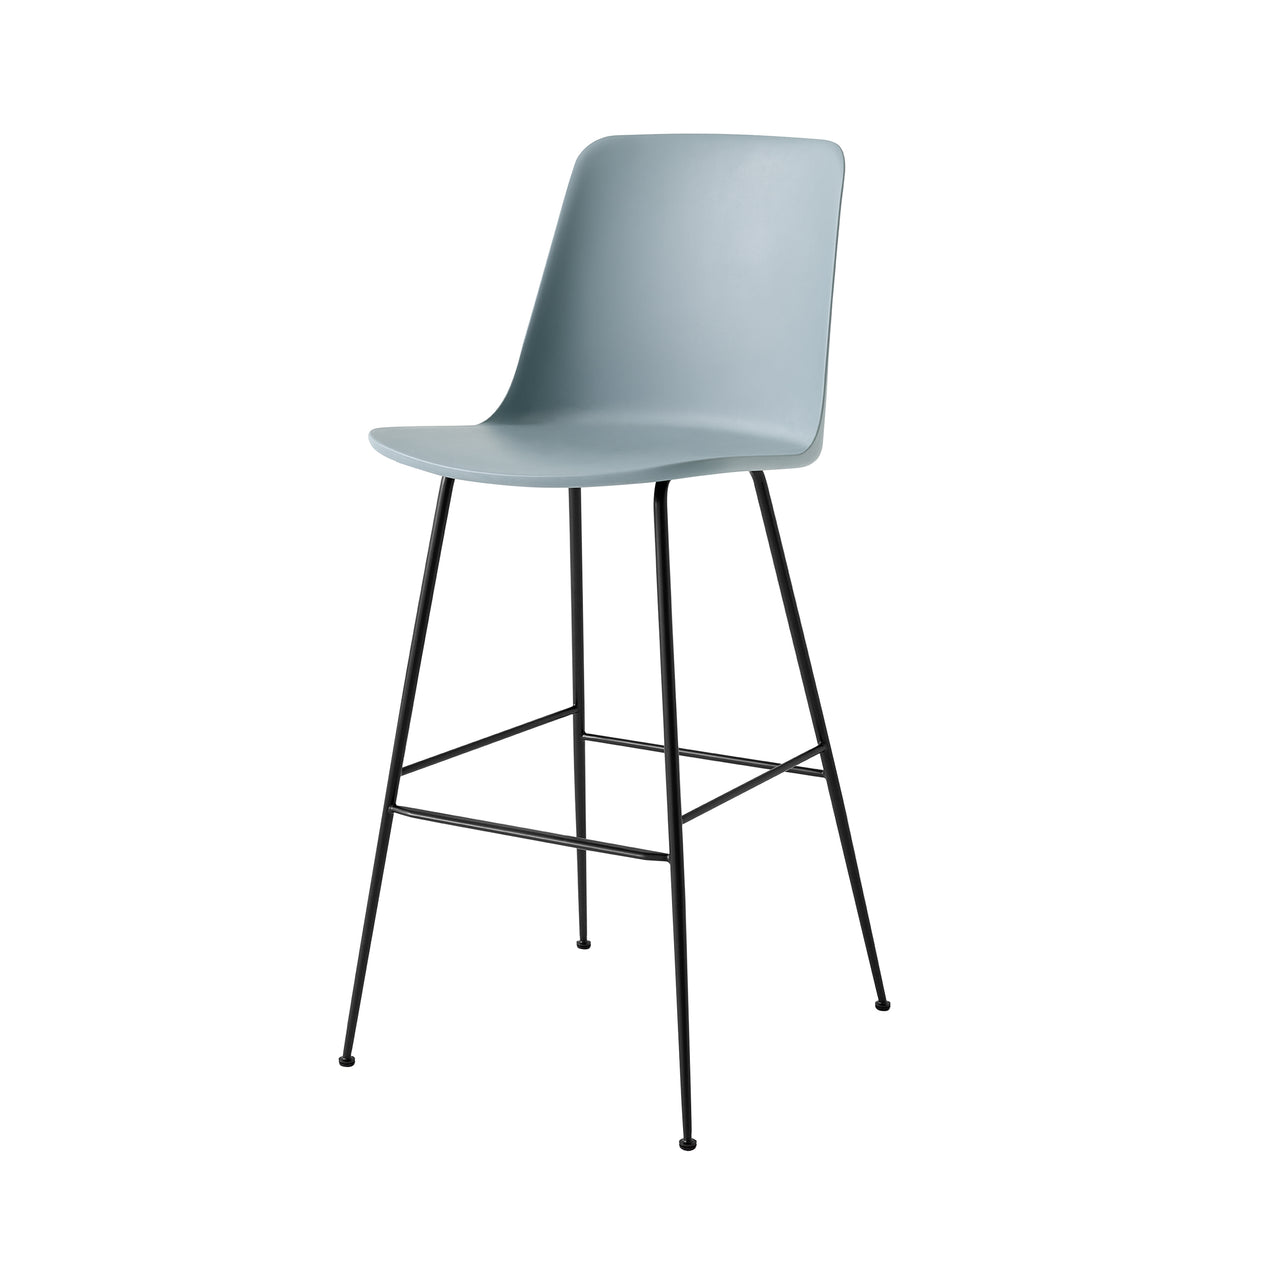 Rely Bar + Counter Highback Chair: HW91 + HW96 + Bar (HW96) + Light Blue + Black